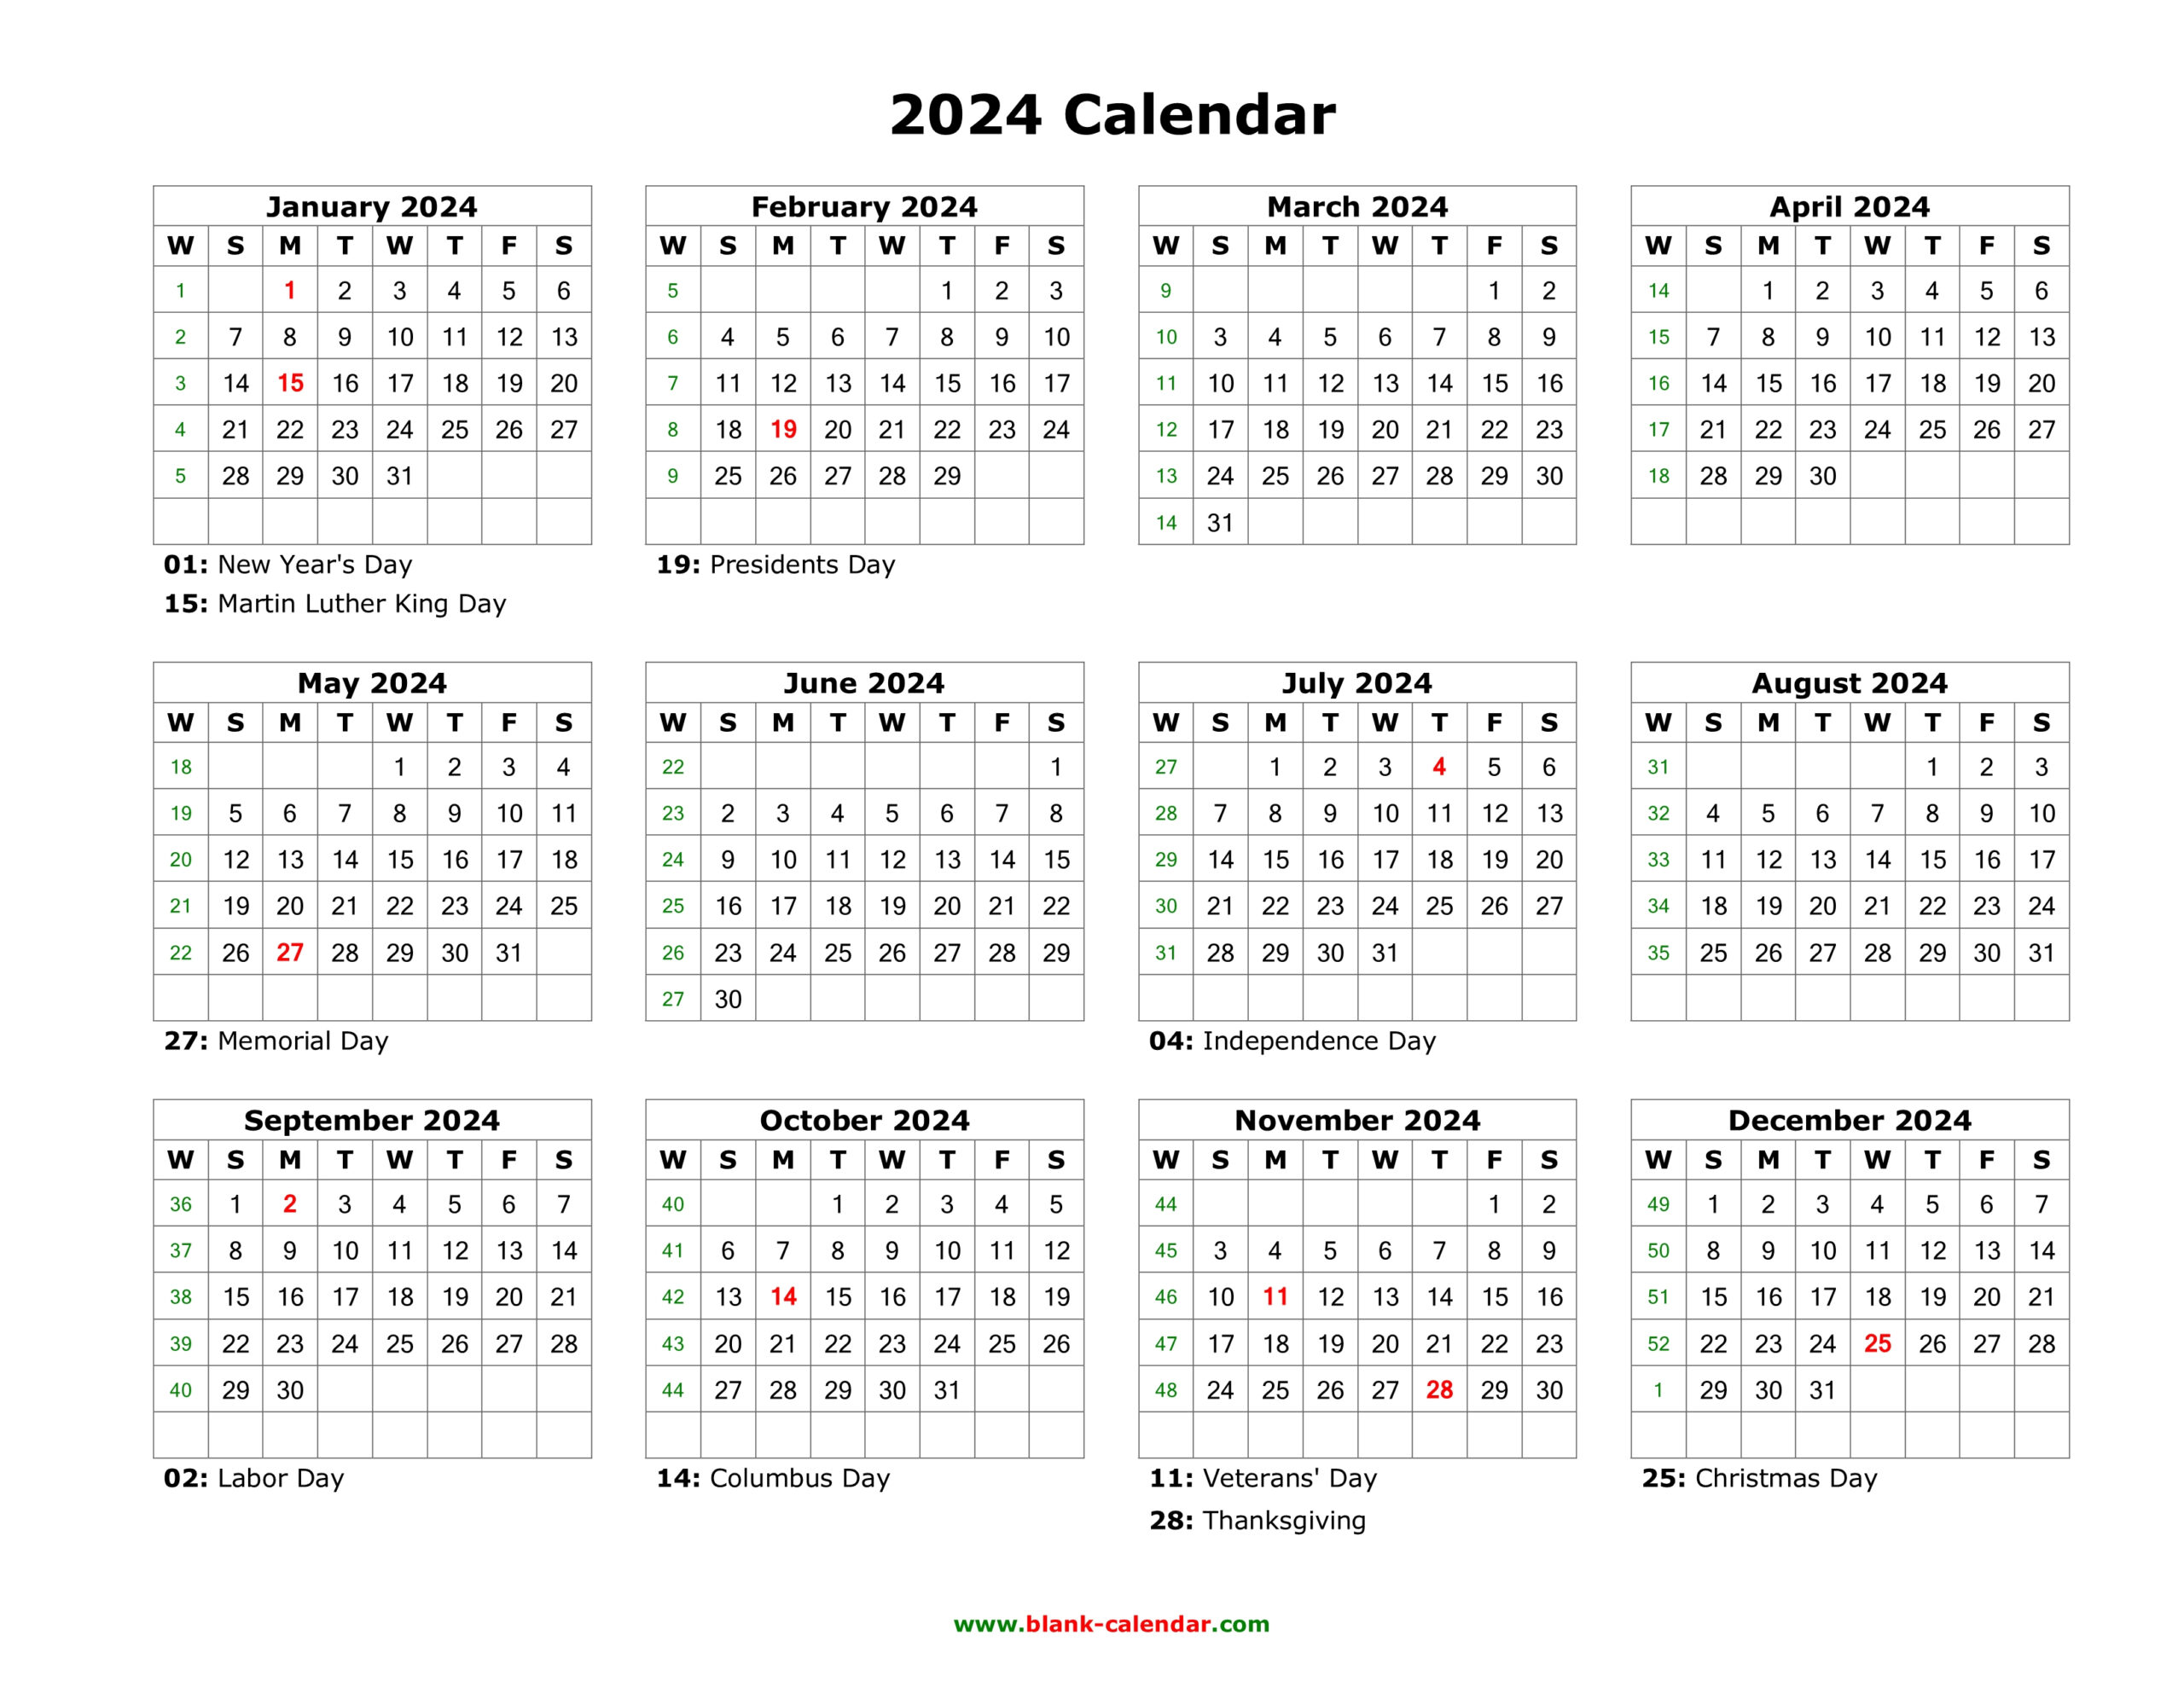 Blank Calendar 2024 | Free Download Calendar Templates for Blank 2024 Calendar Printable With Holidays